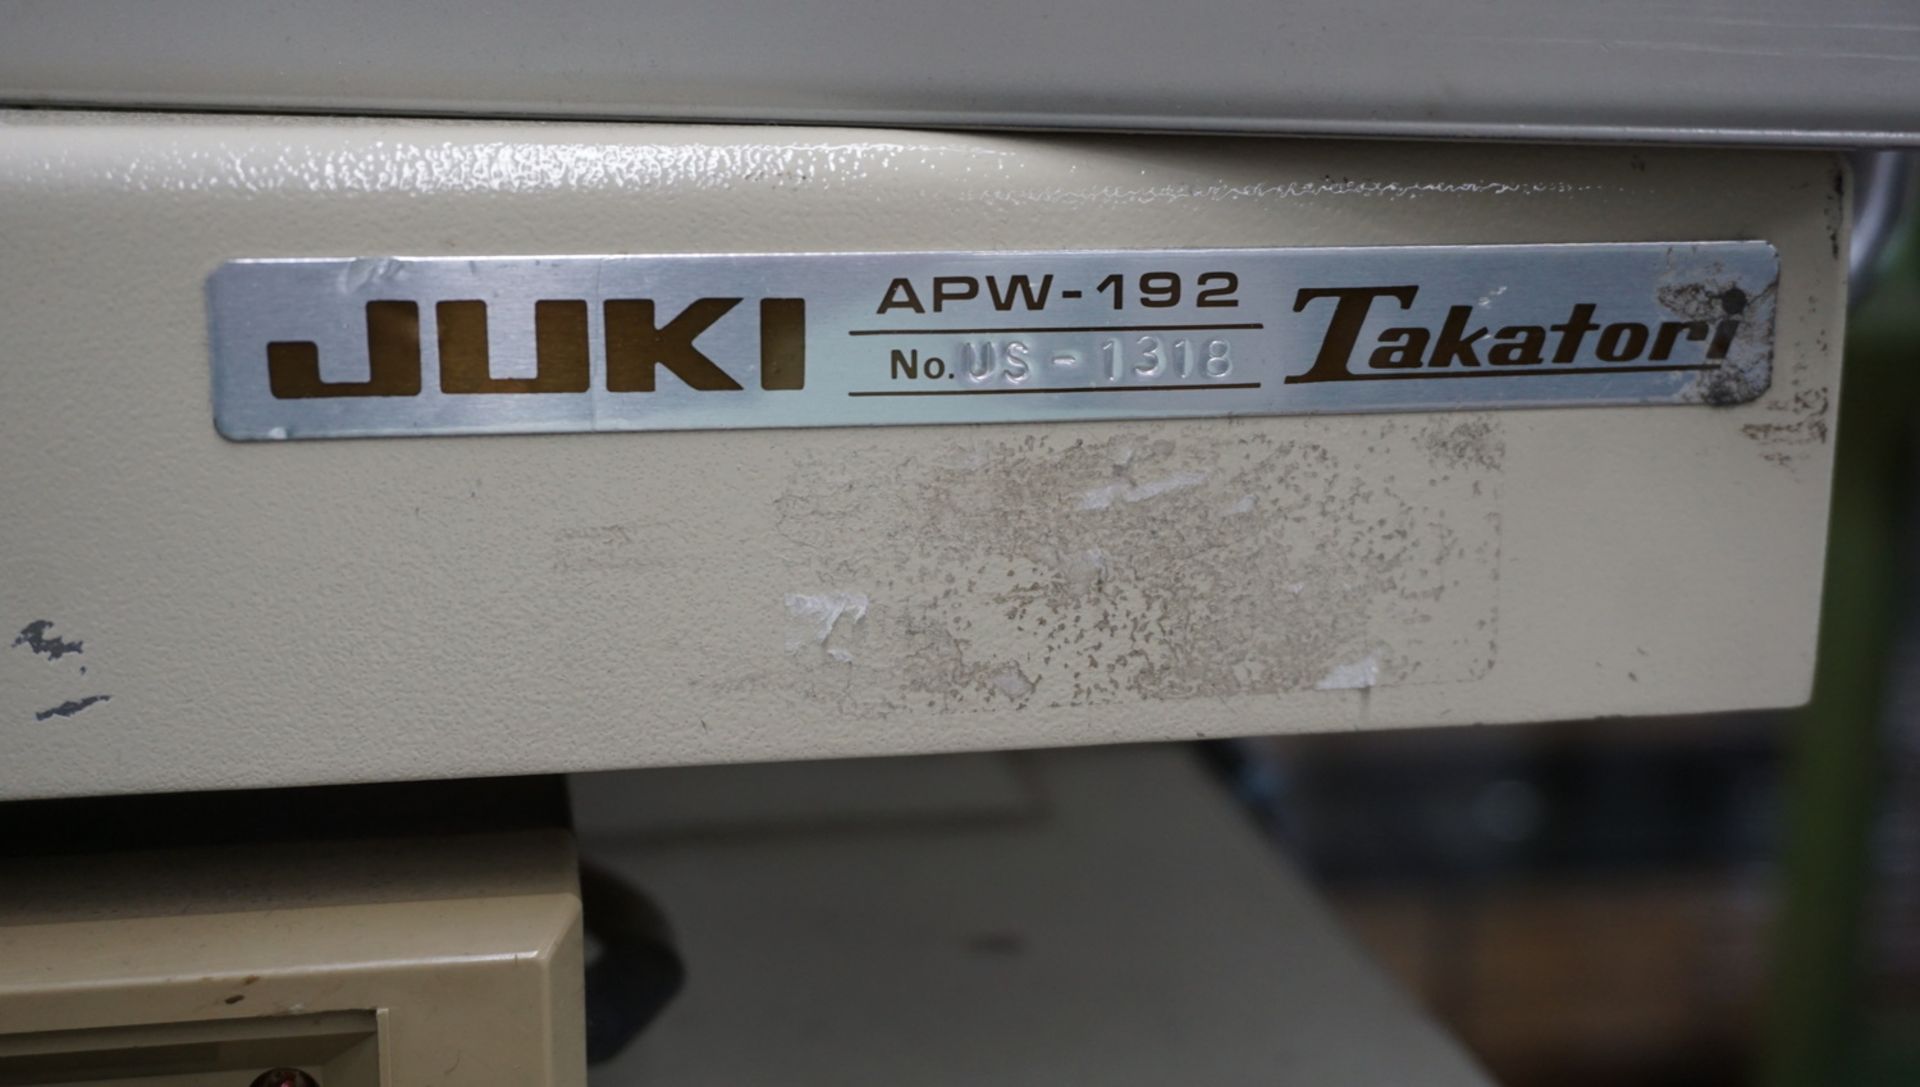 JUKI APW-192 TAKATOR SINGLE & DOUBLE WELT AUTOMATIC POCKET MACHINE, S/N US-1318 - Image 11 of 13